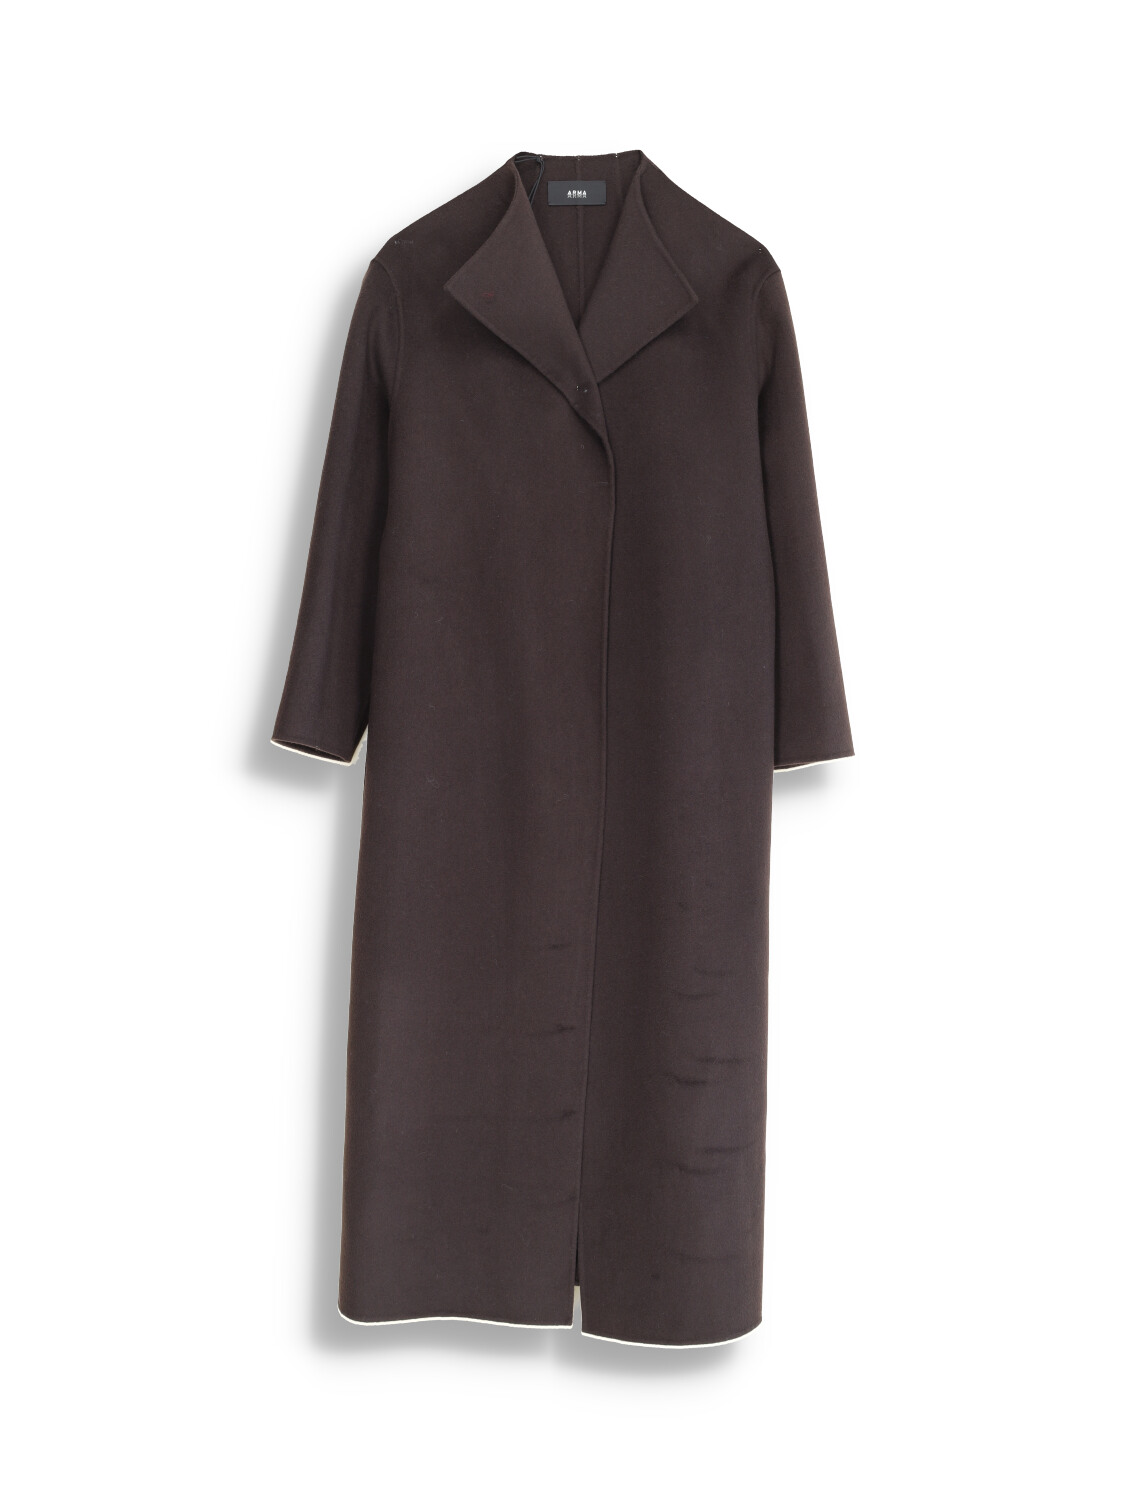 Kyoto - Oversized coat with tie belt in wool